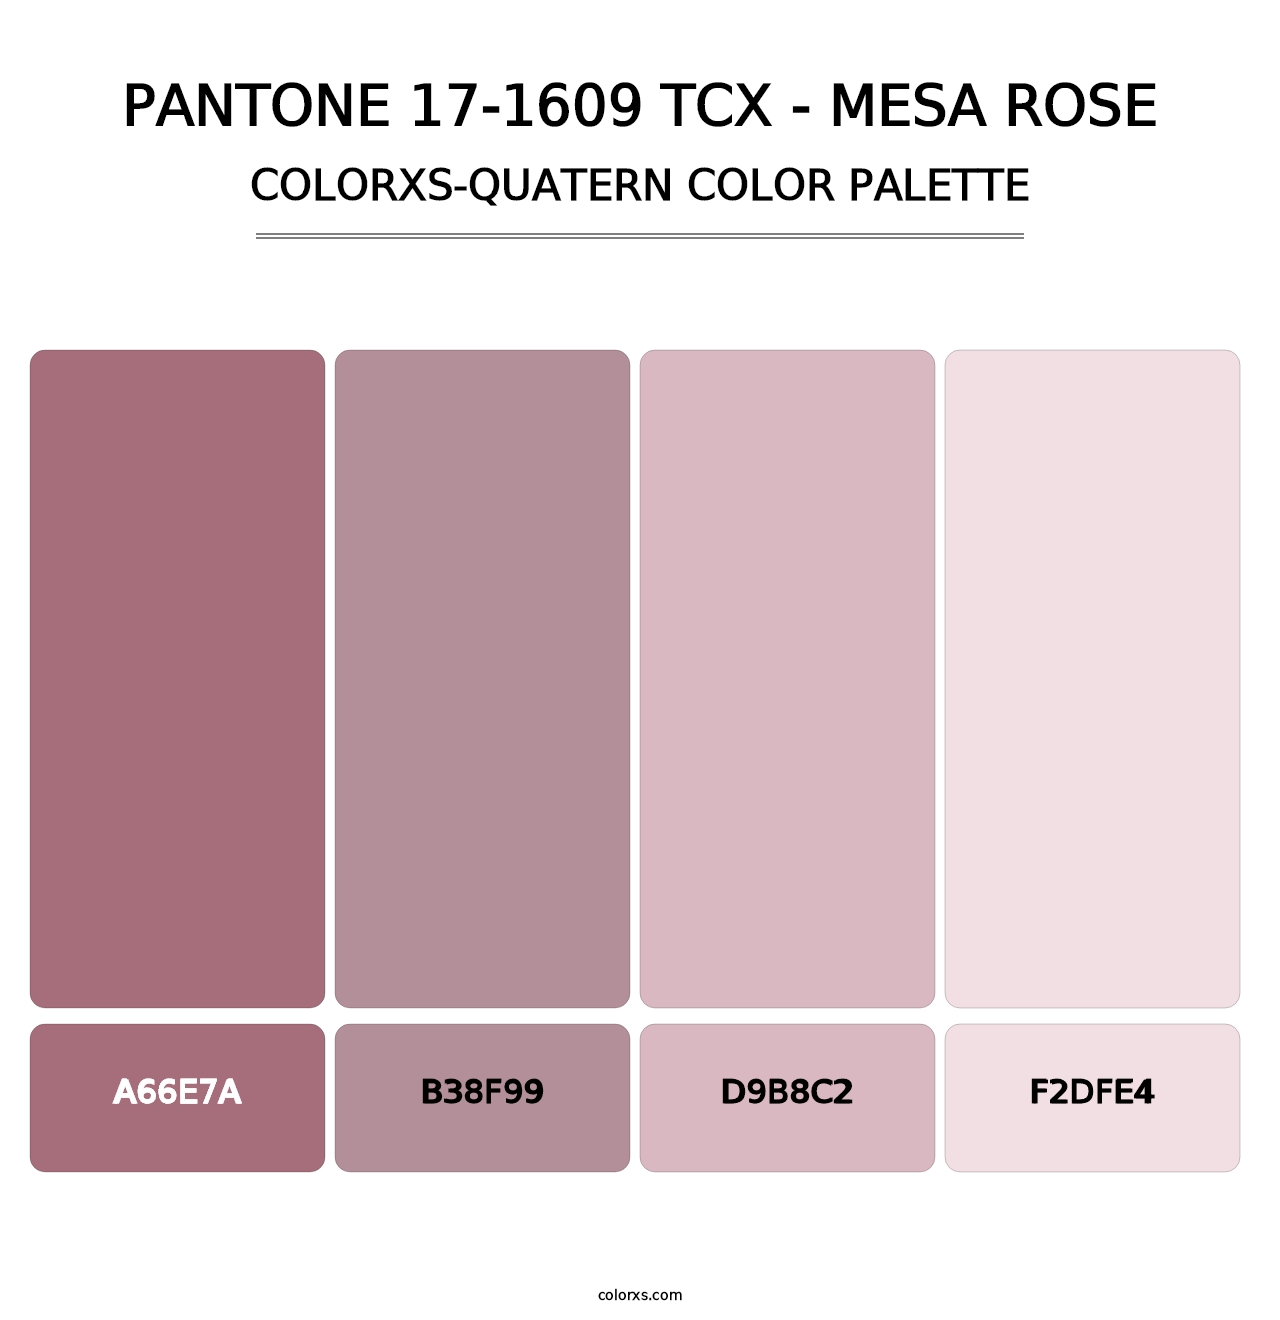 PANTONE 17-1609 TCX - Mesa Rose - Colorxs Quatern Palette